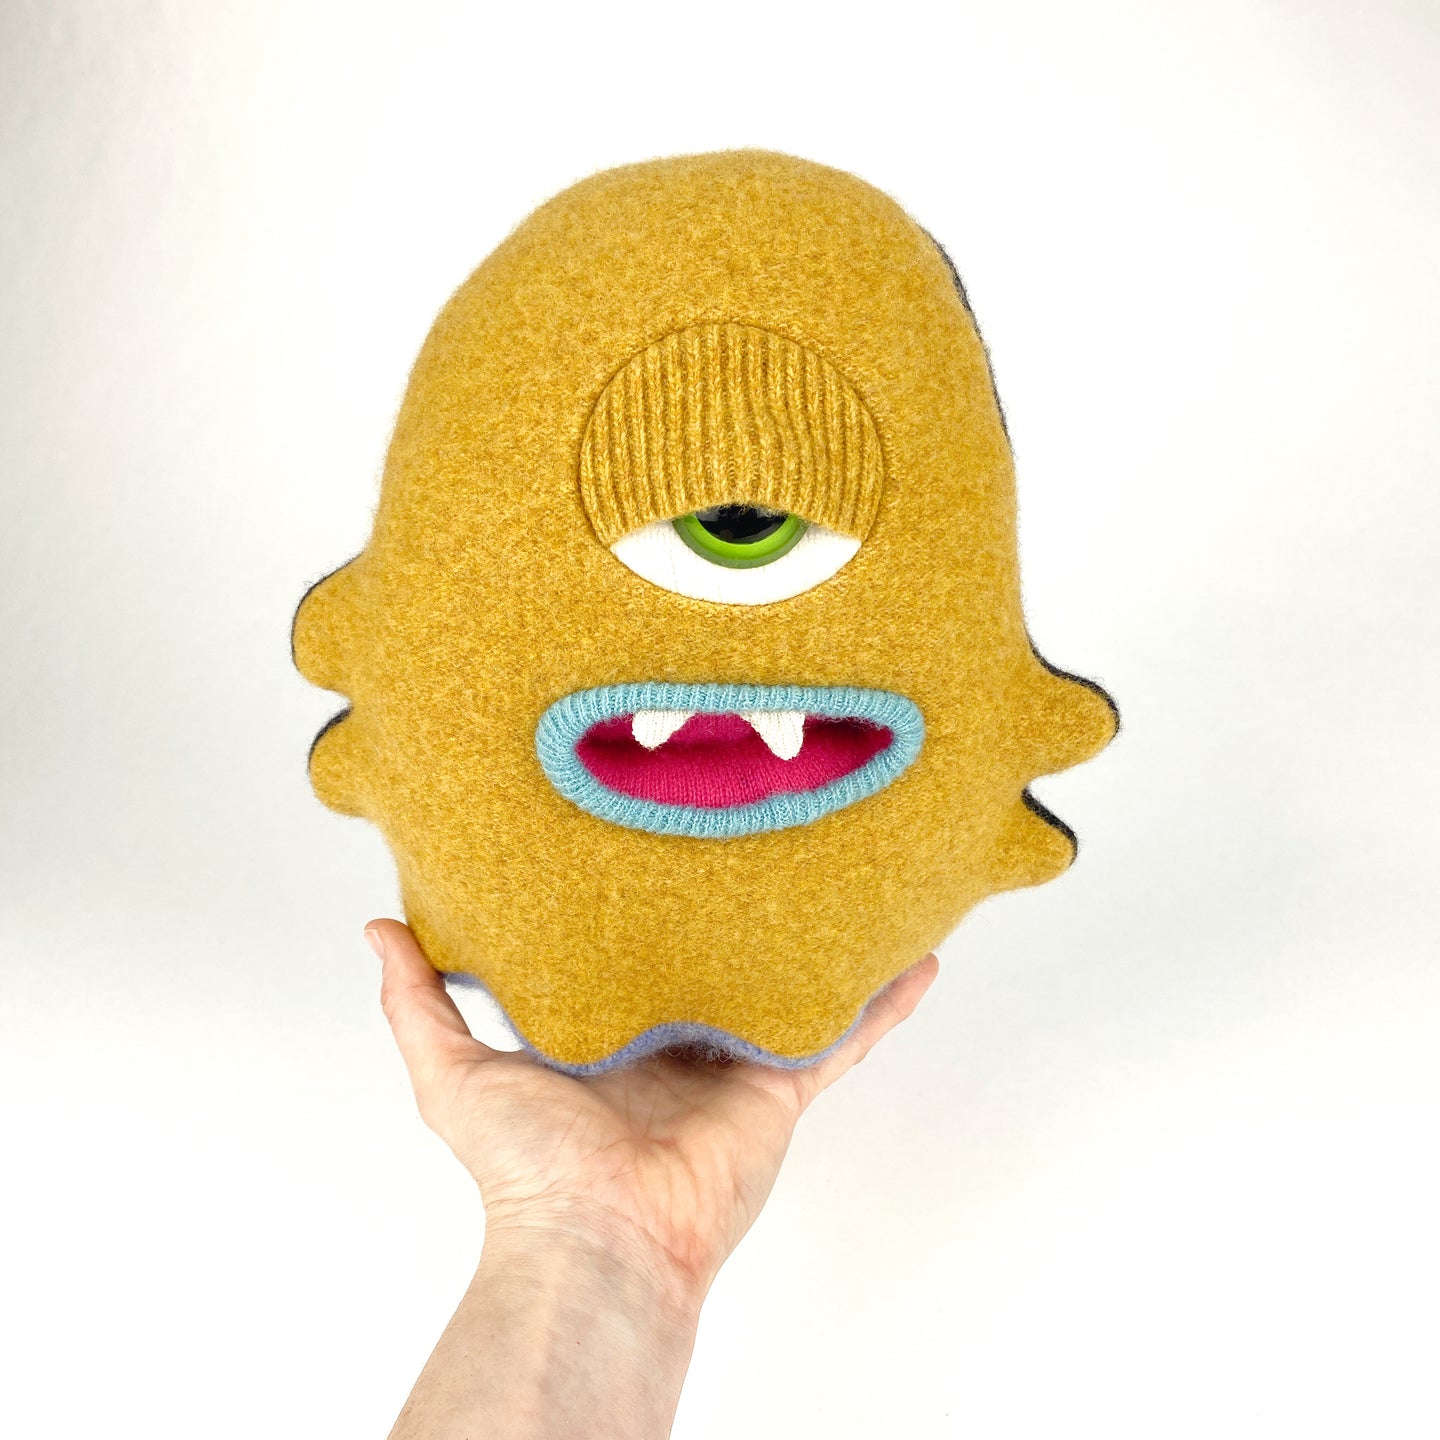 Don the my friend monster handmade stuffed animal plush